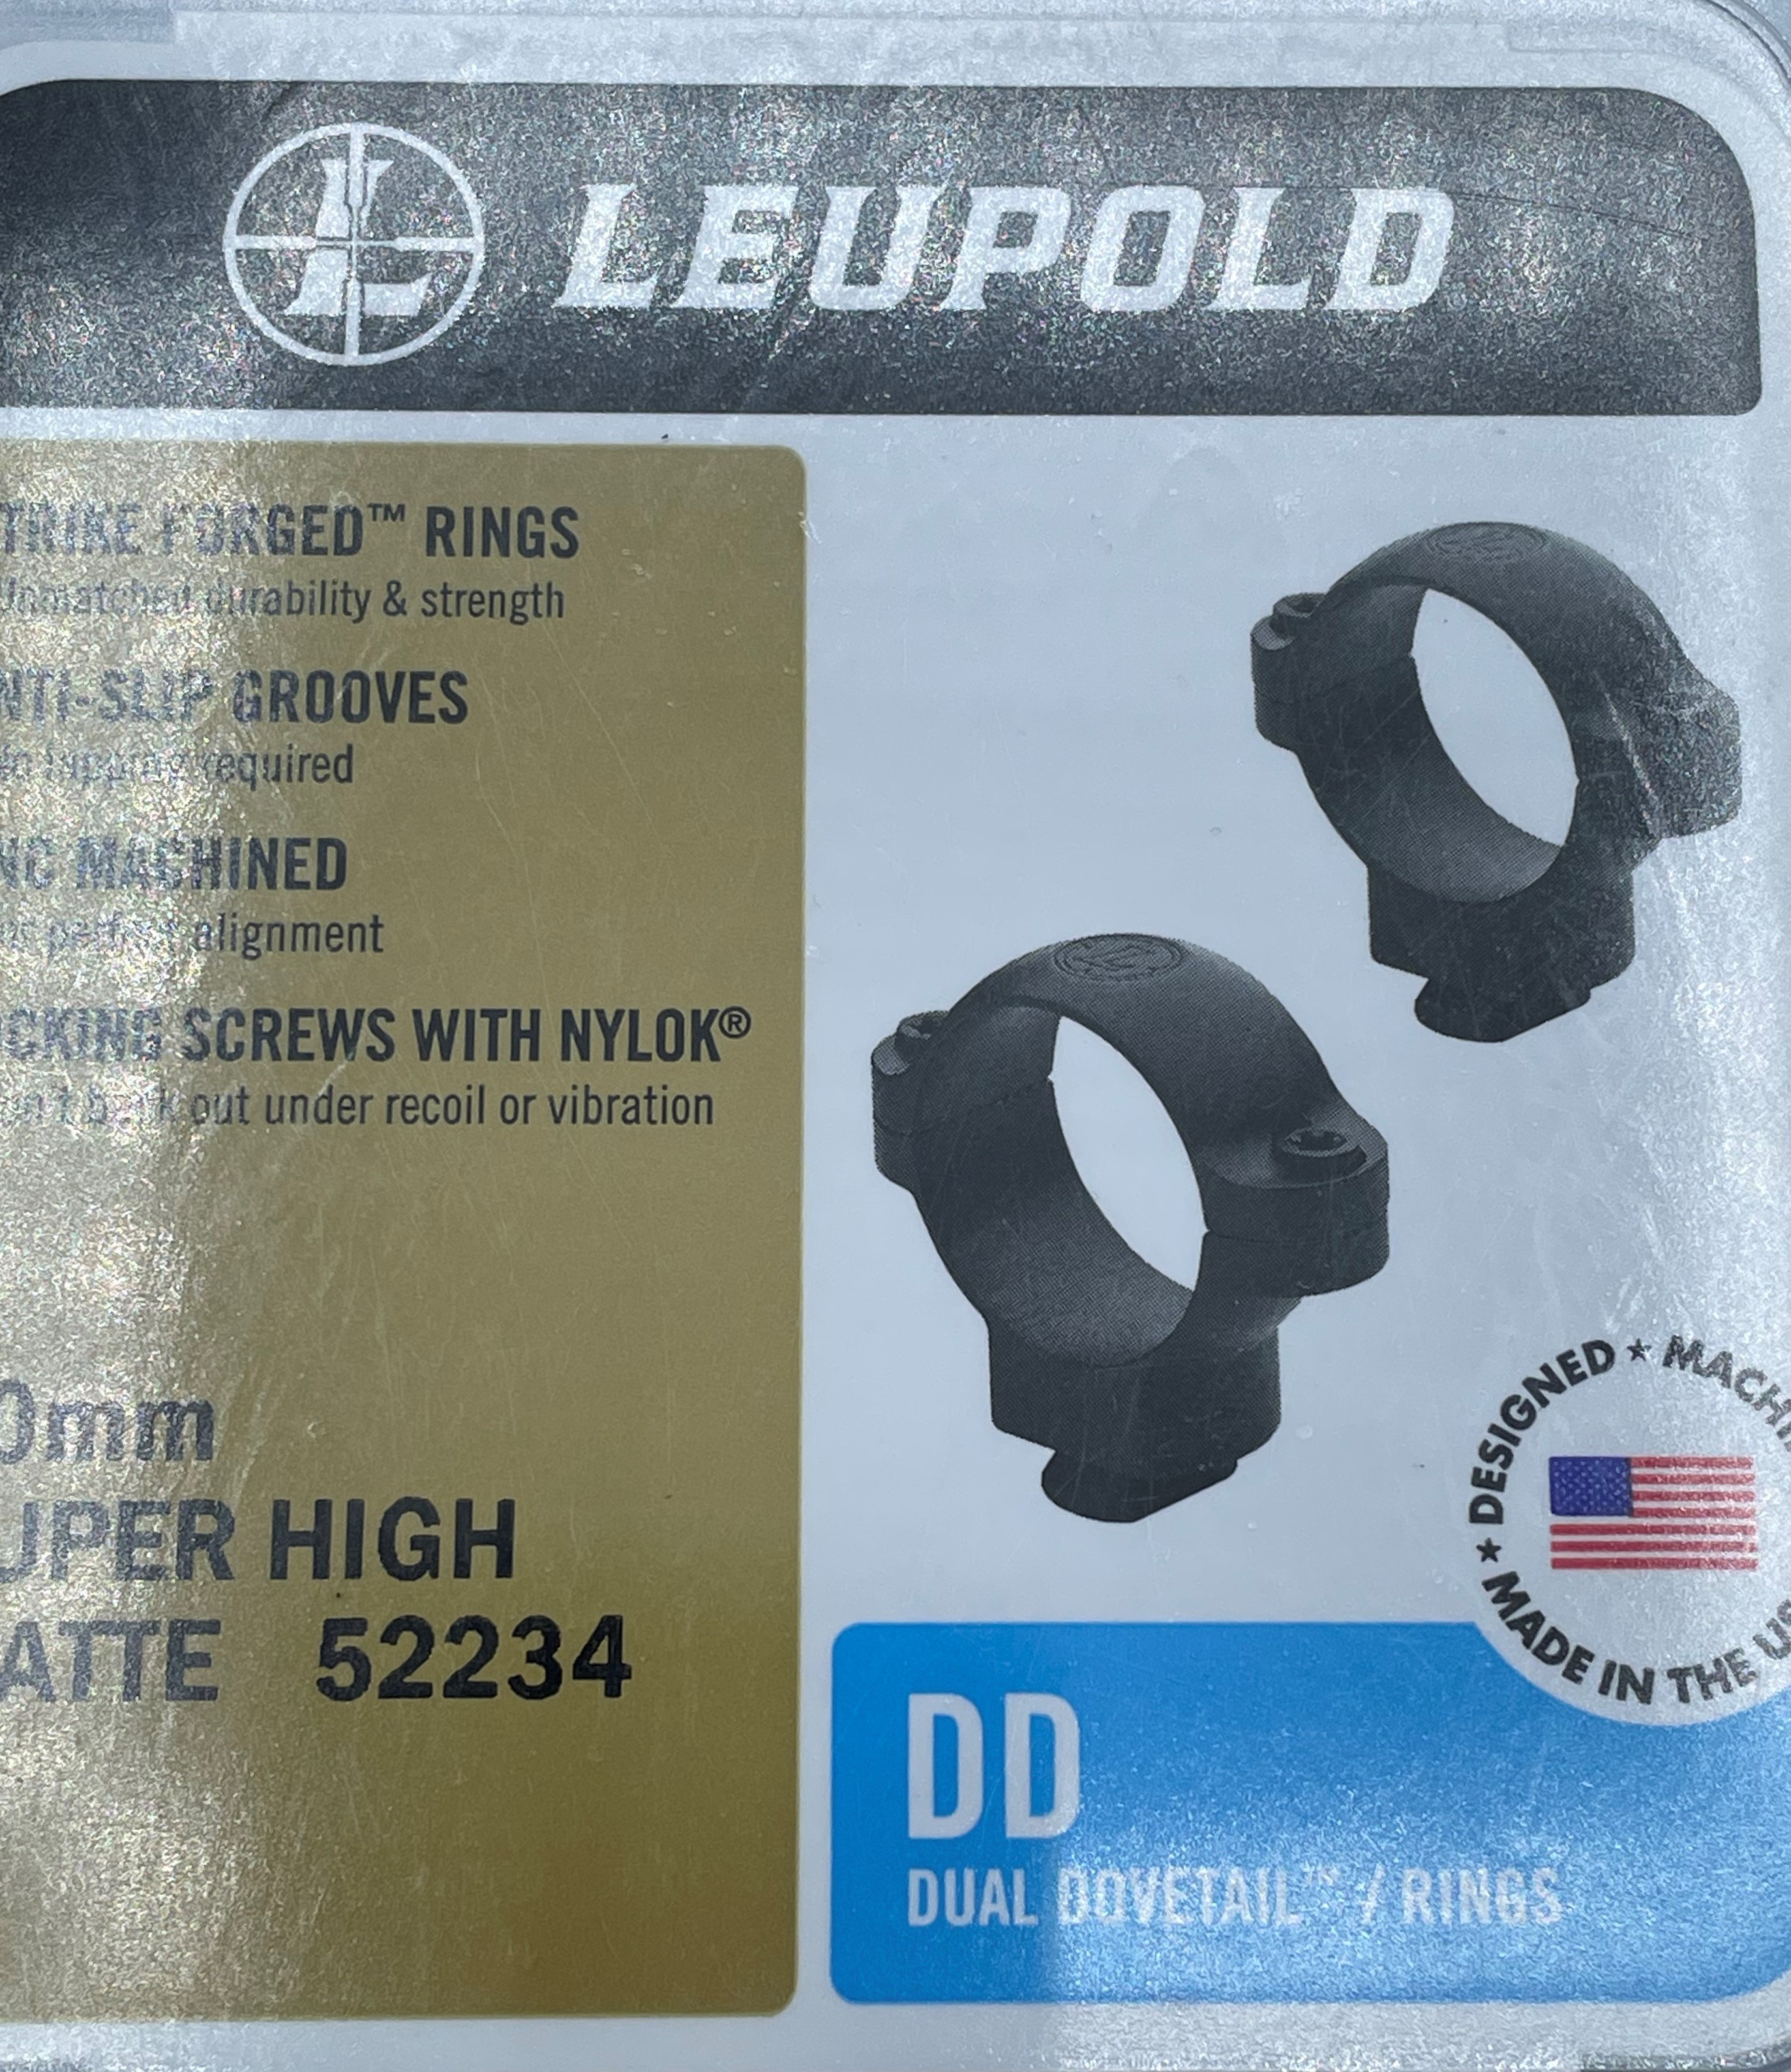 Leupold 30MM Super High Scope Rings